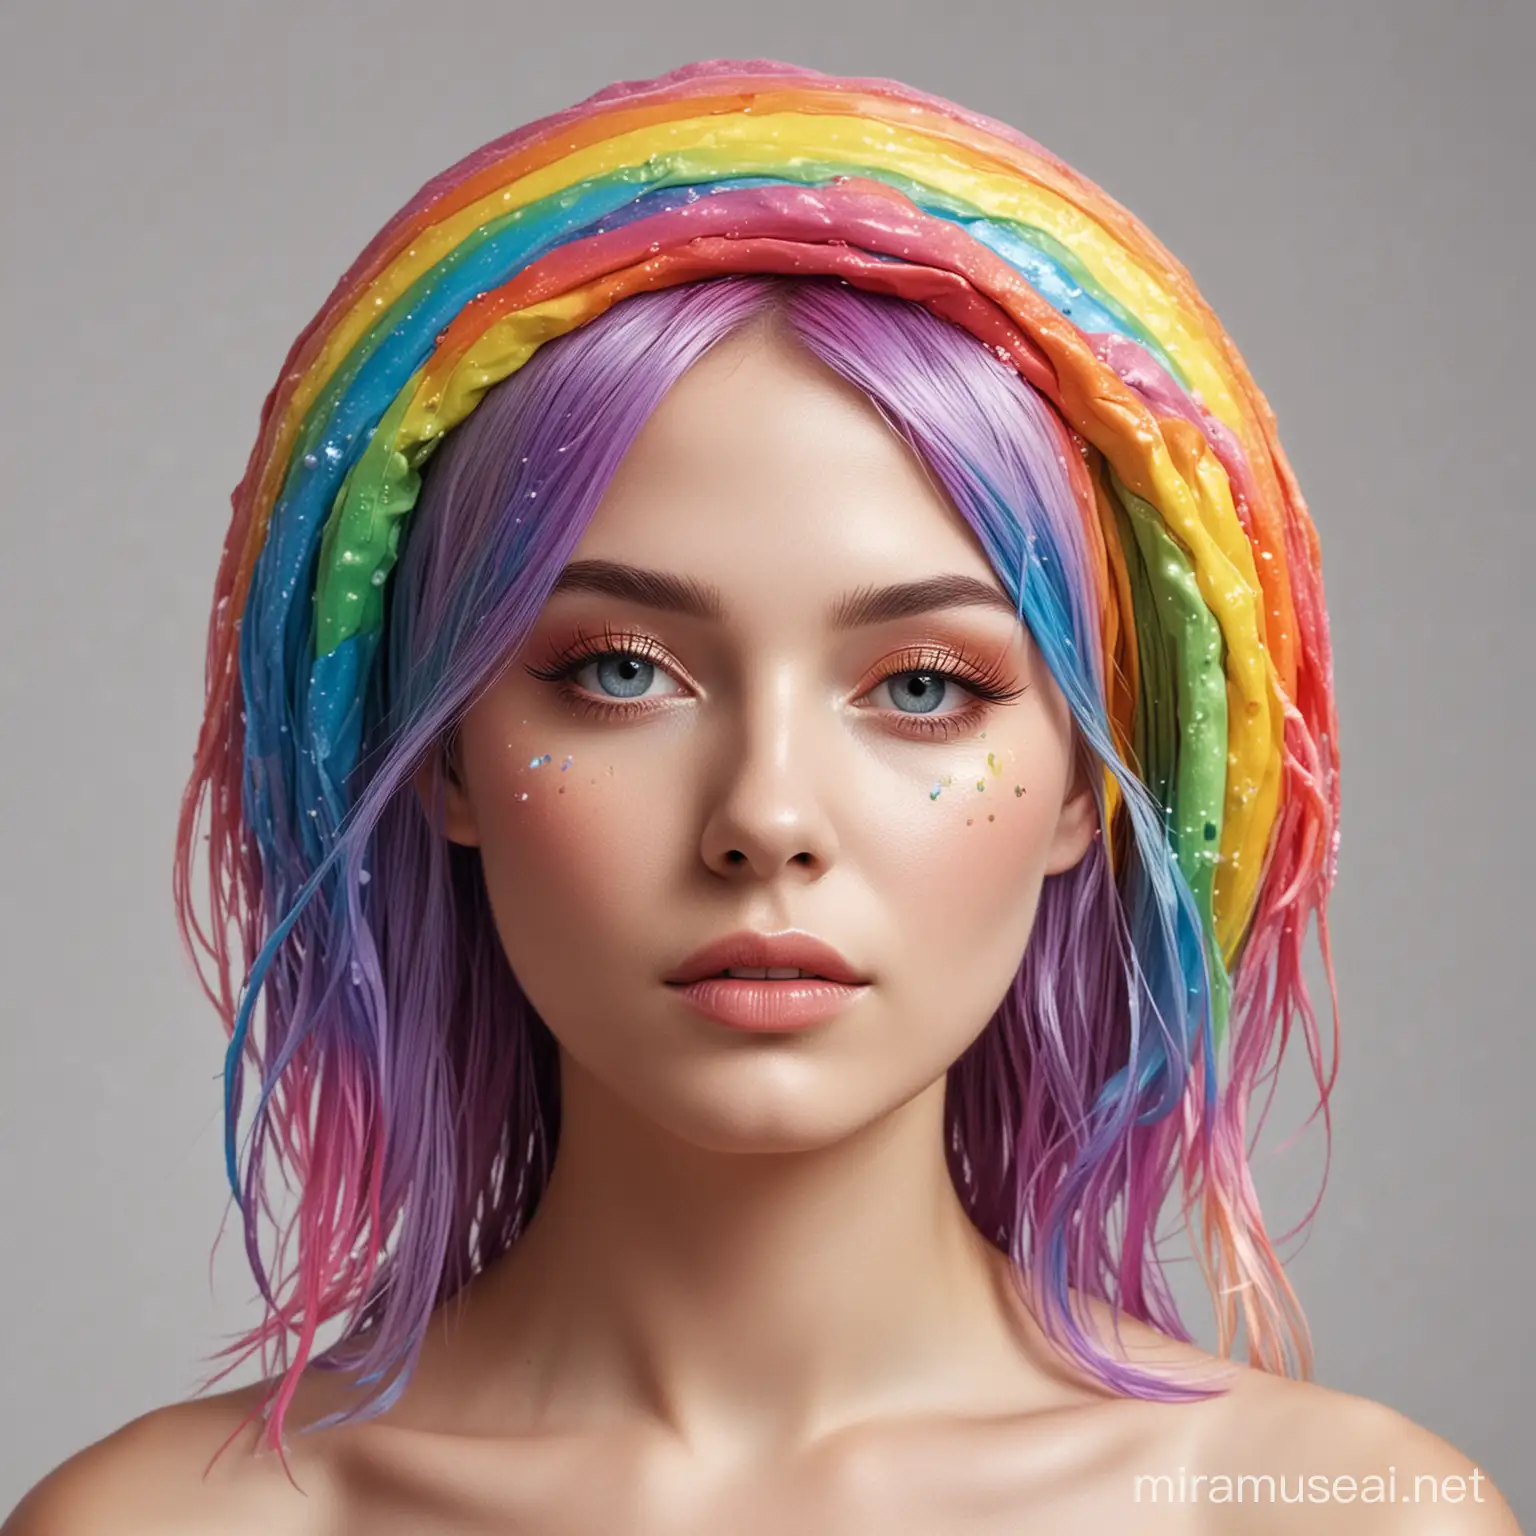 Rainbow girl covered